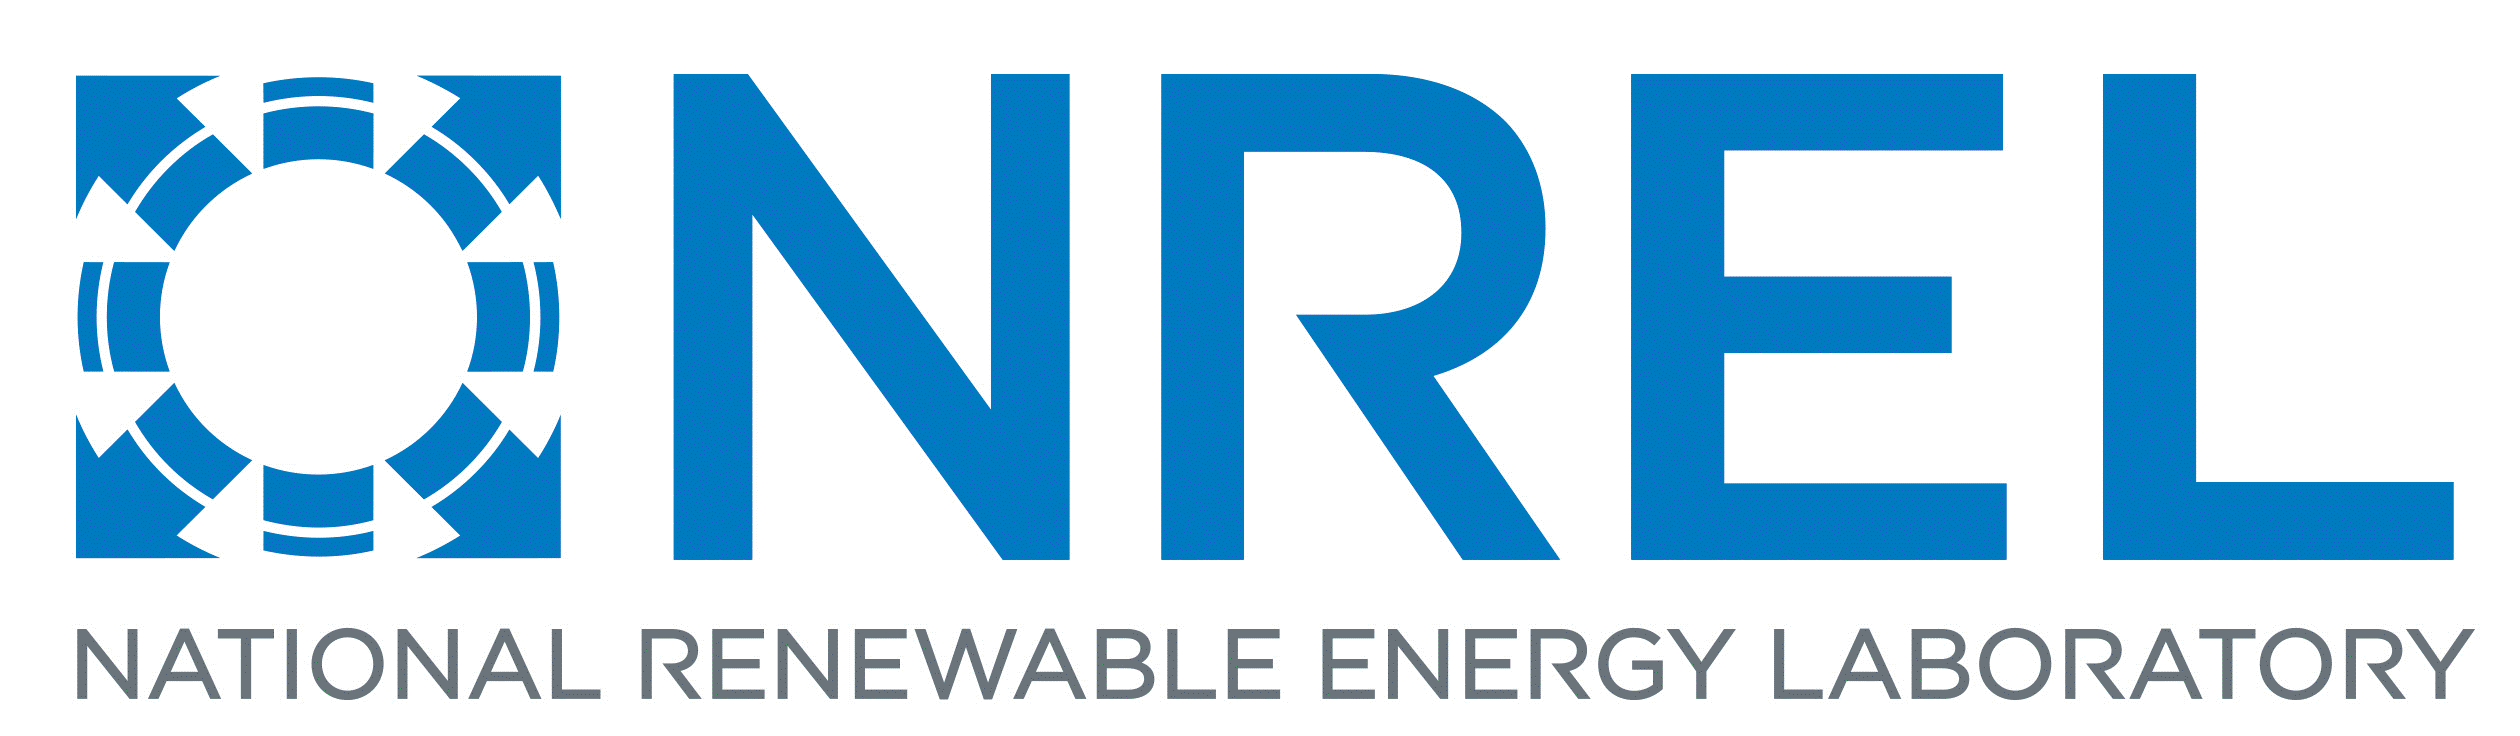 National Renewable Energy Laboratory. Logo.